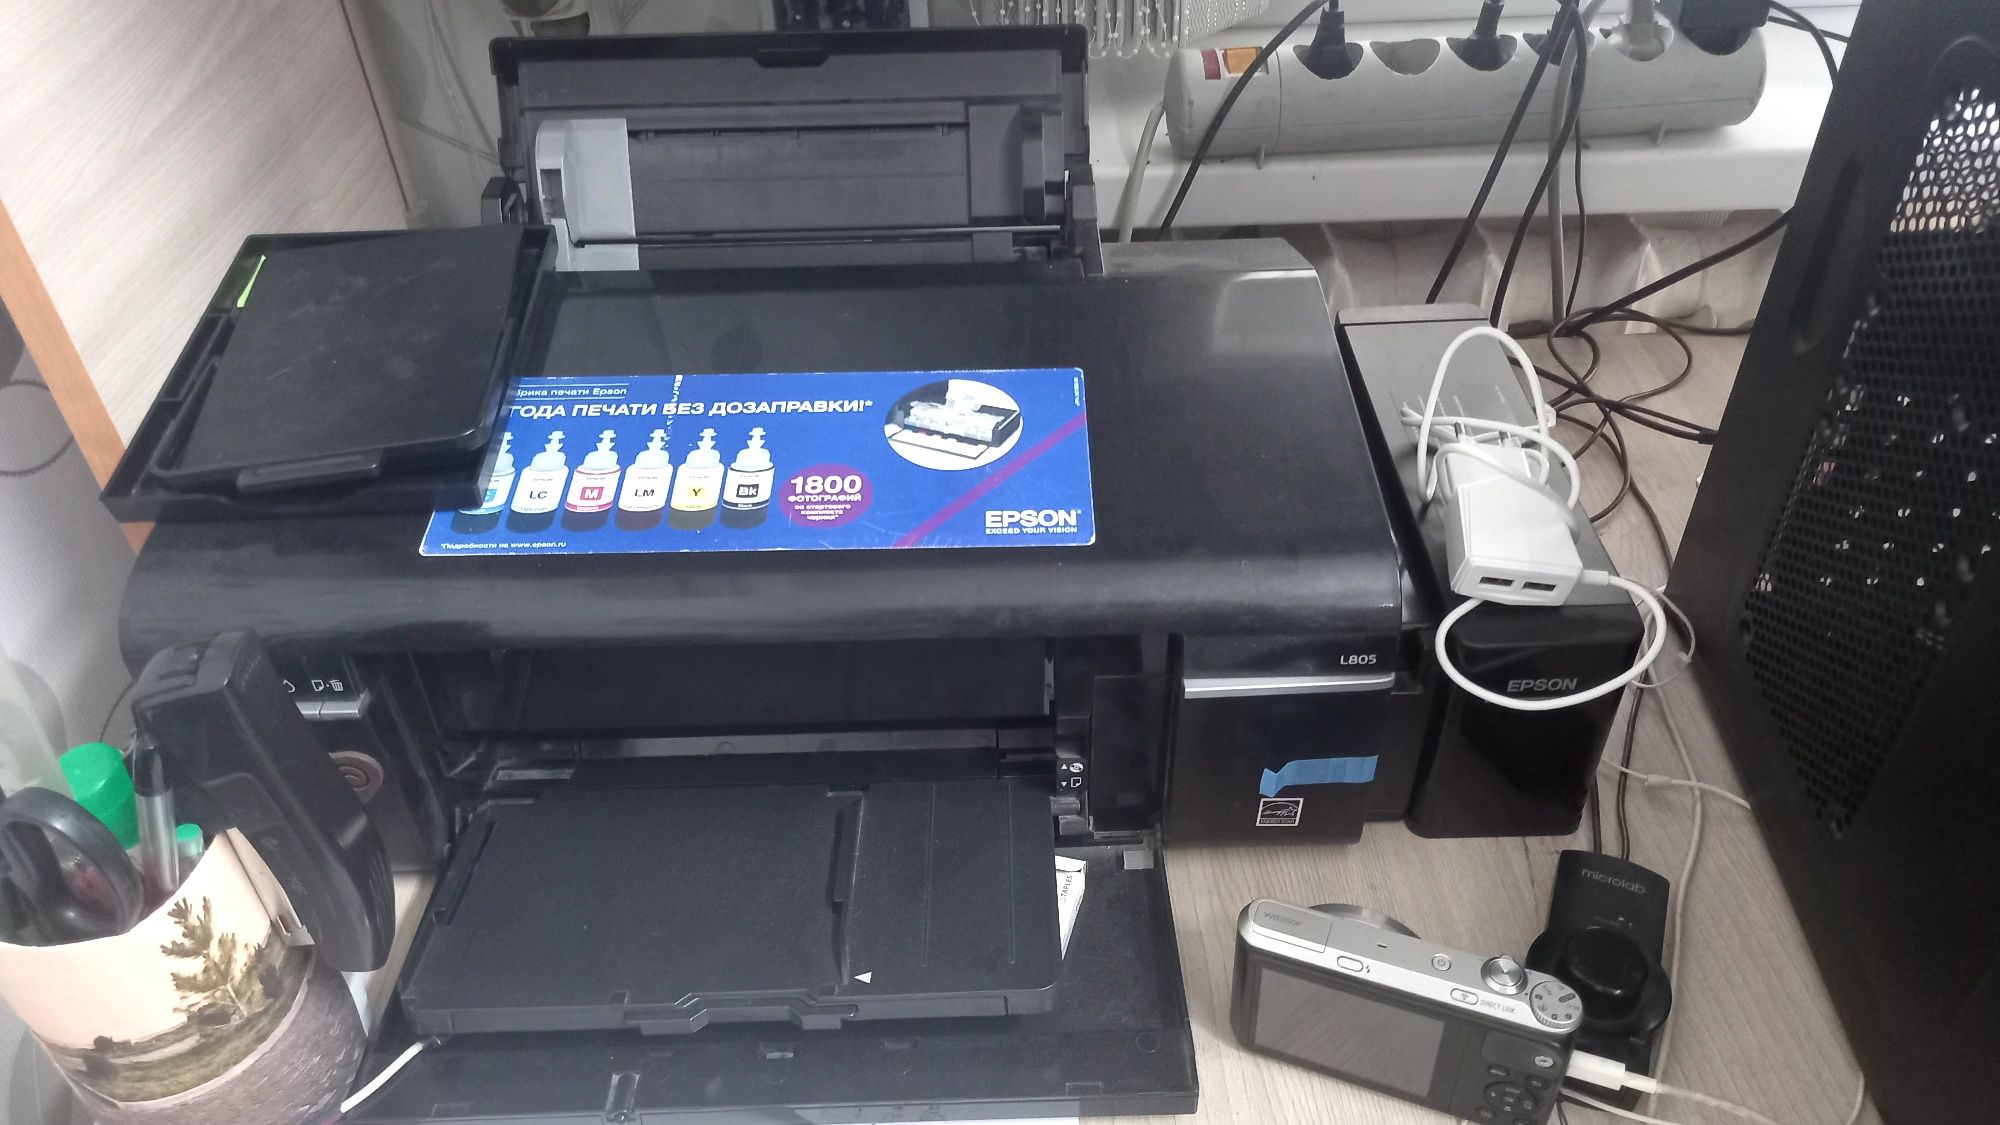 Ккомпьютер принтер L805, Canon принтер 3в1, и сканер